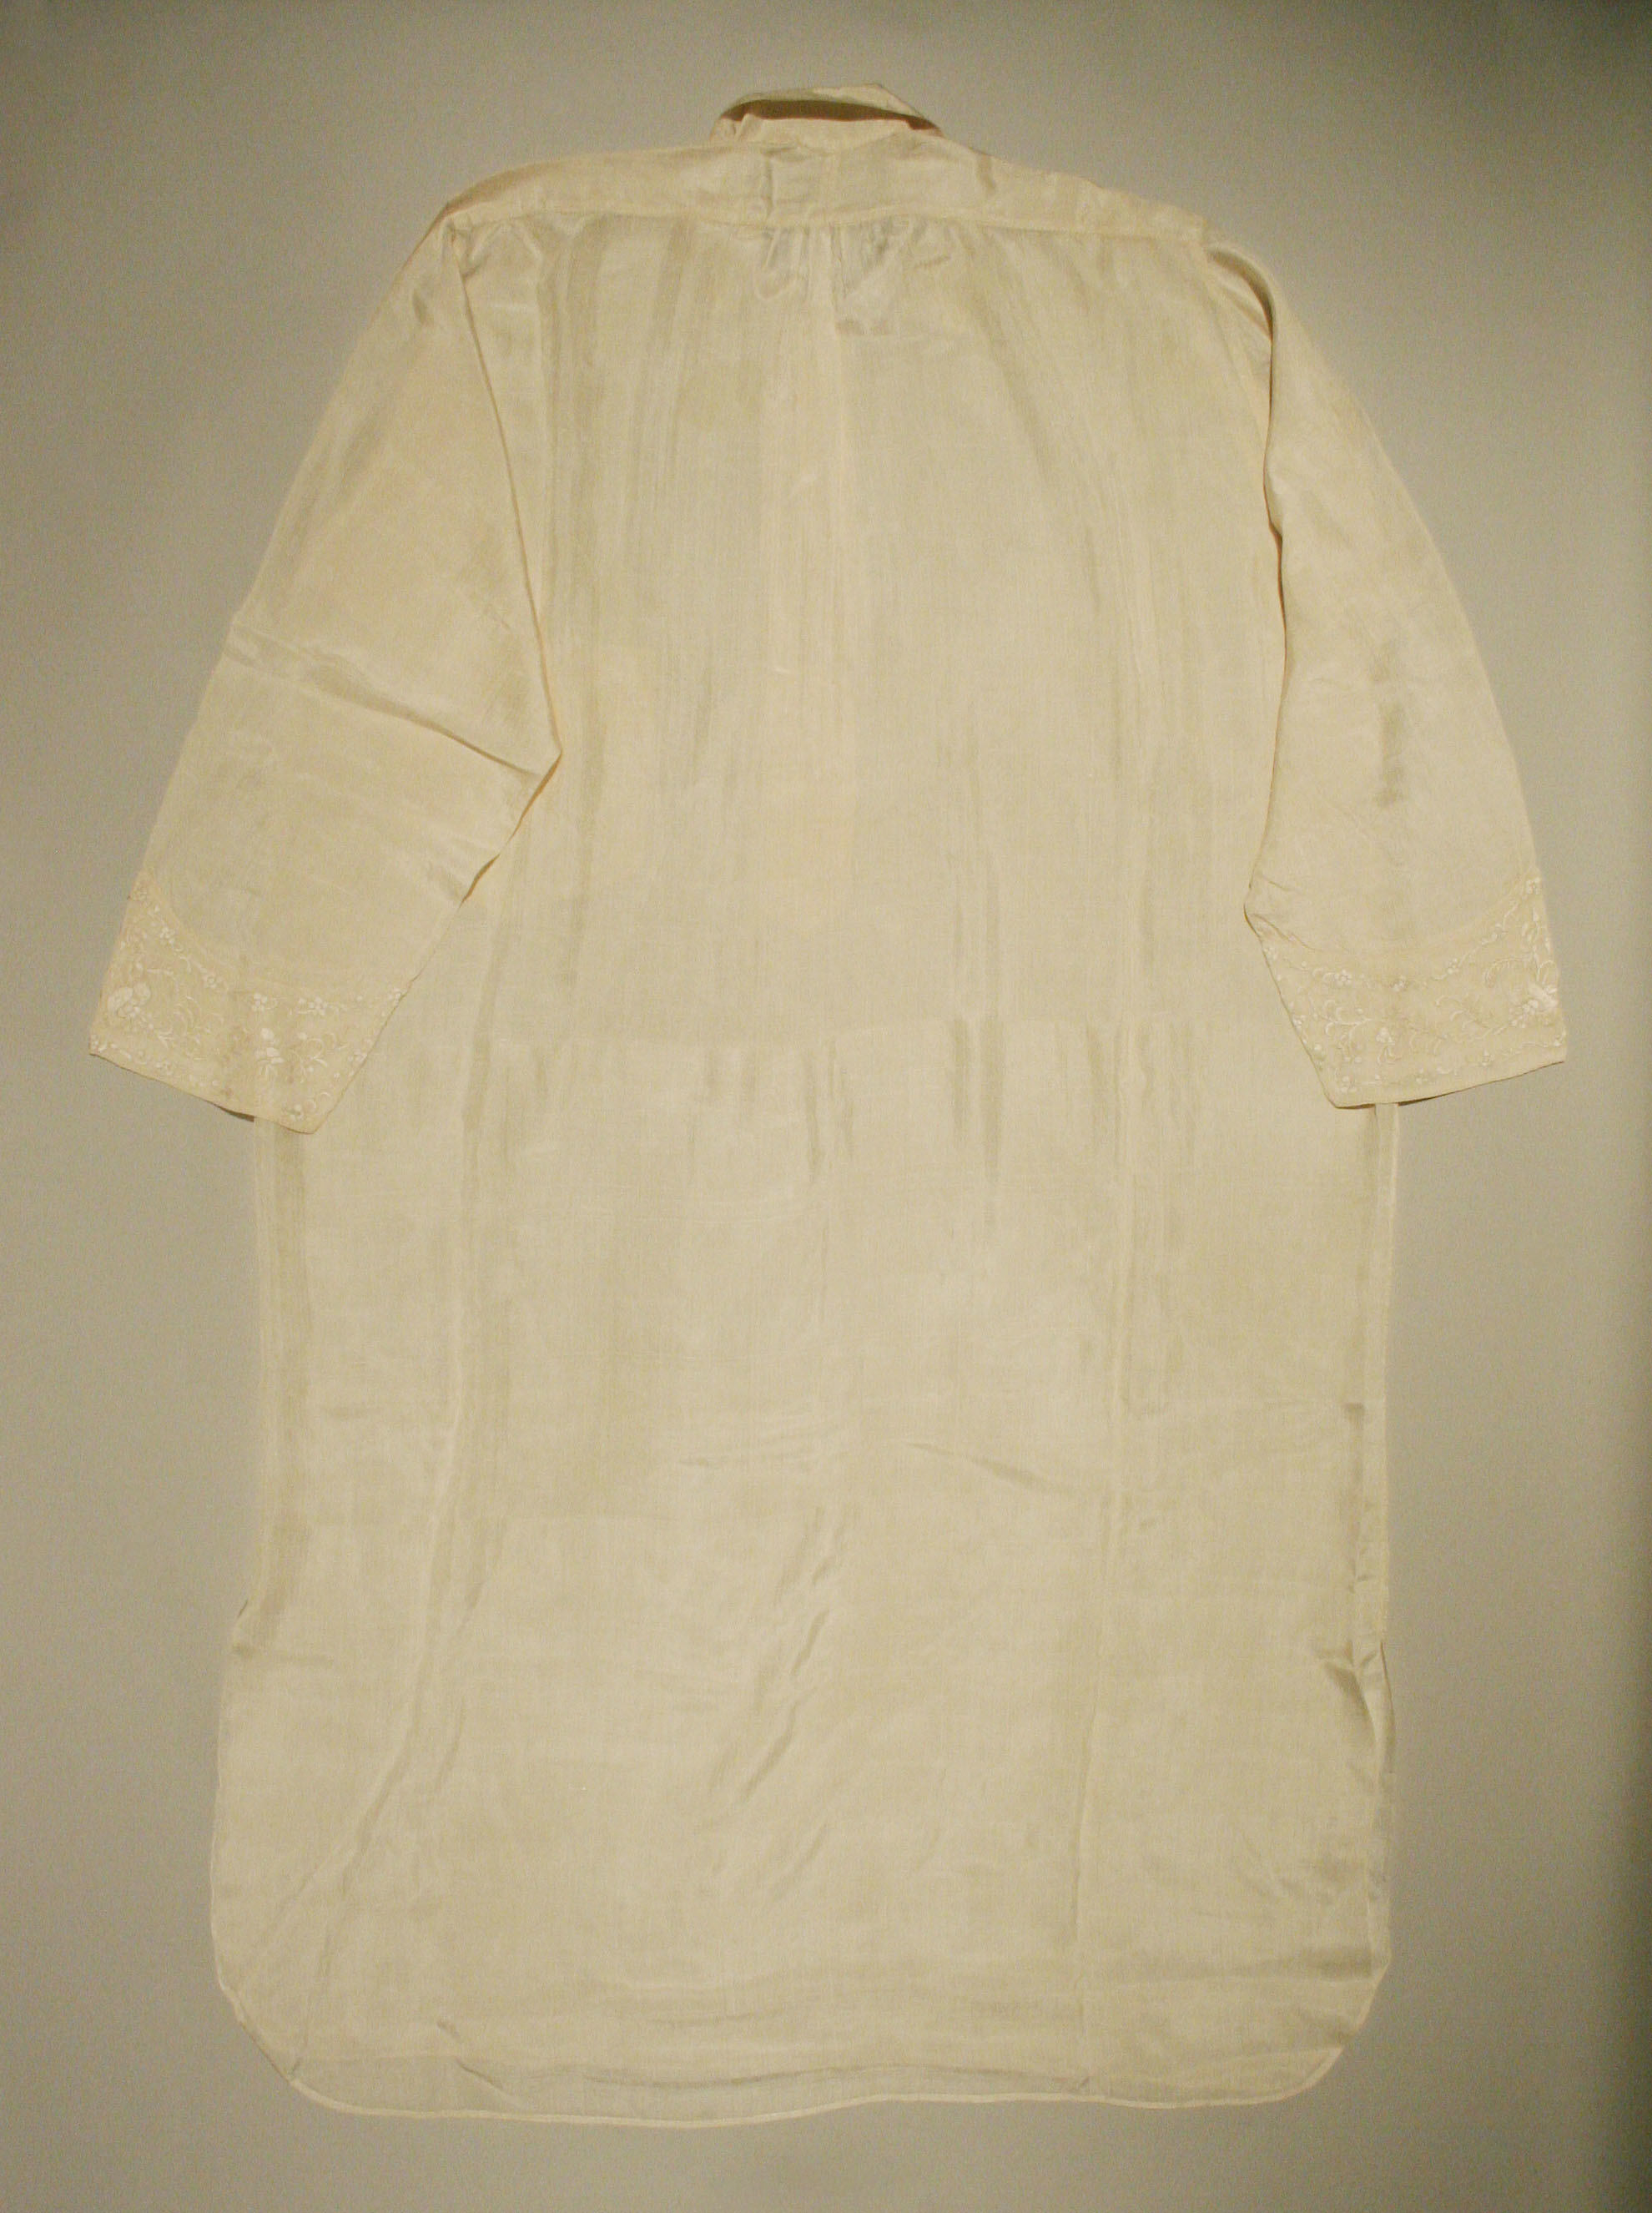 Wedding nightshirt | American | The Metropolitan Museum of Art